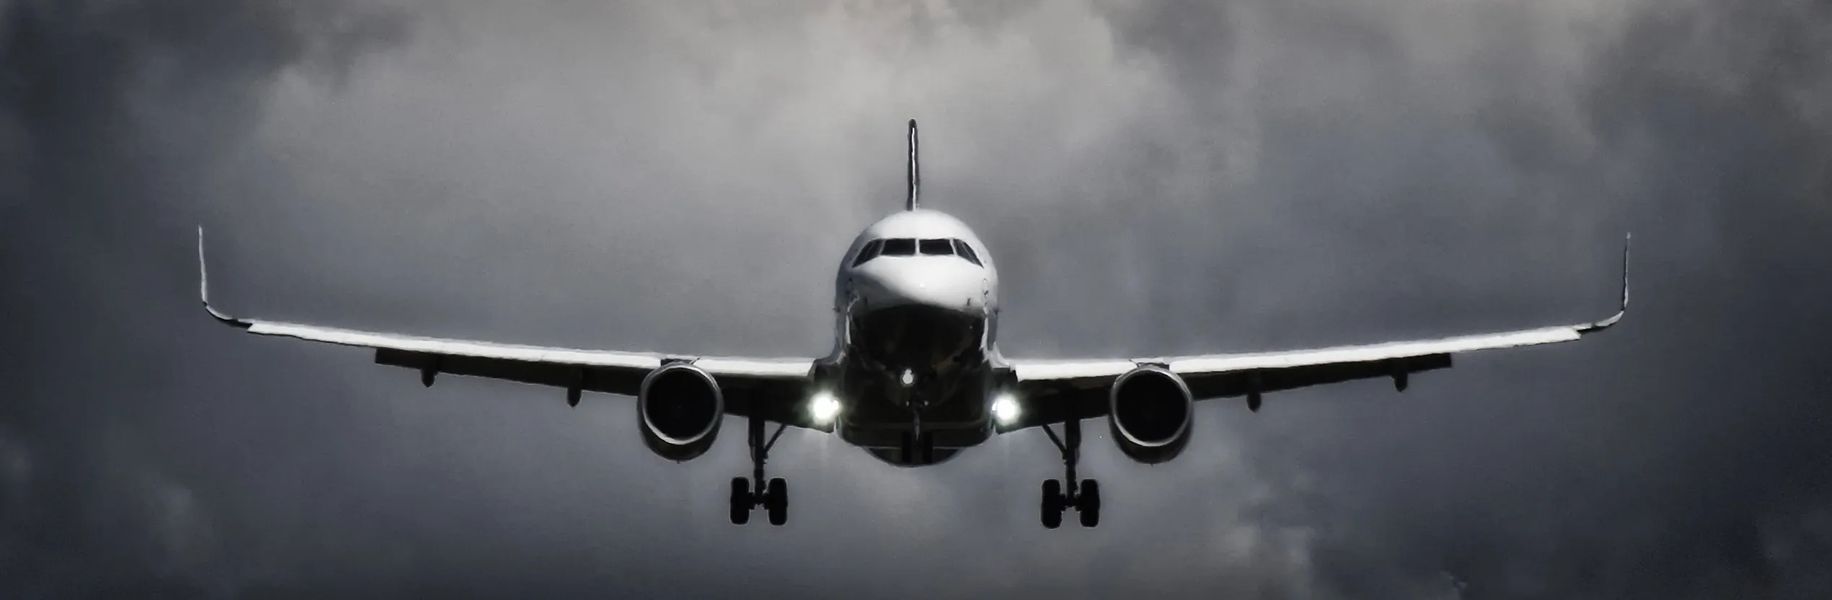 Hazards to buying Cheap Flights - CultureTrekking.com - #Cheapflights #cheapflightshazards #hiddenairlinefees